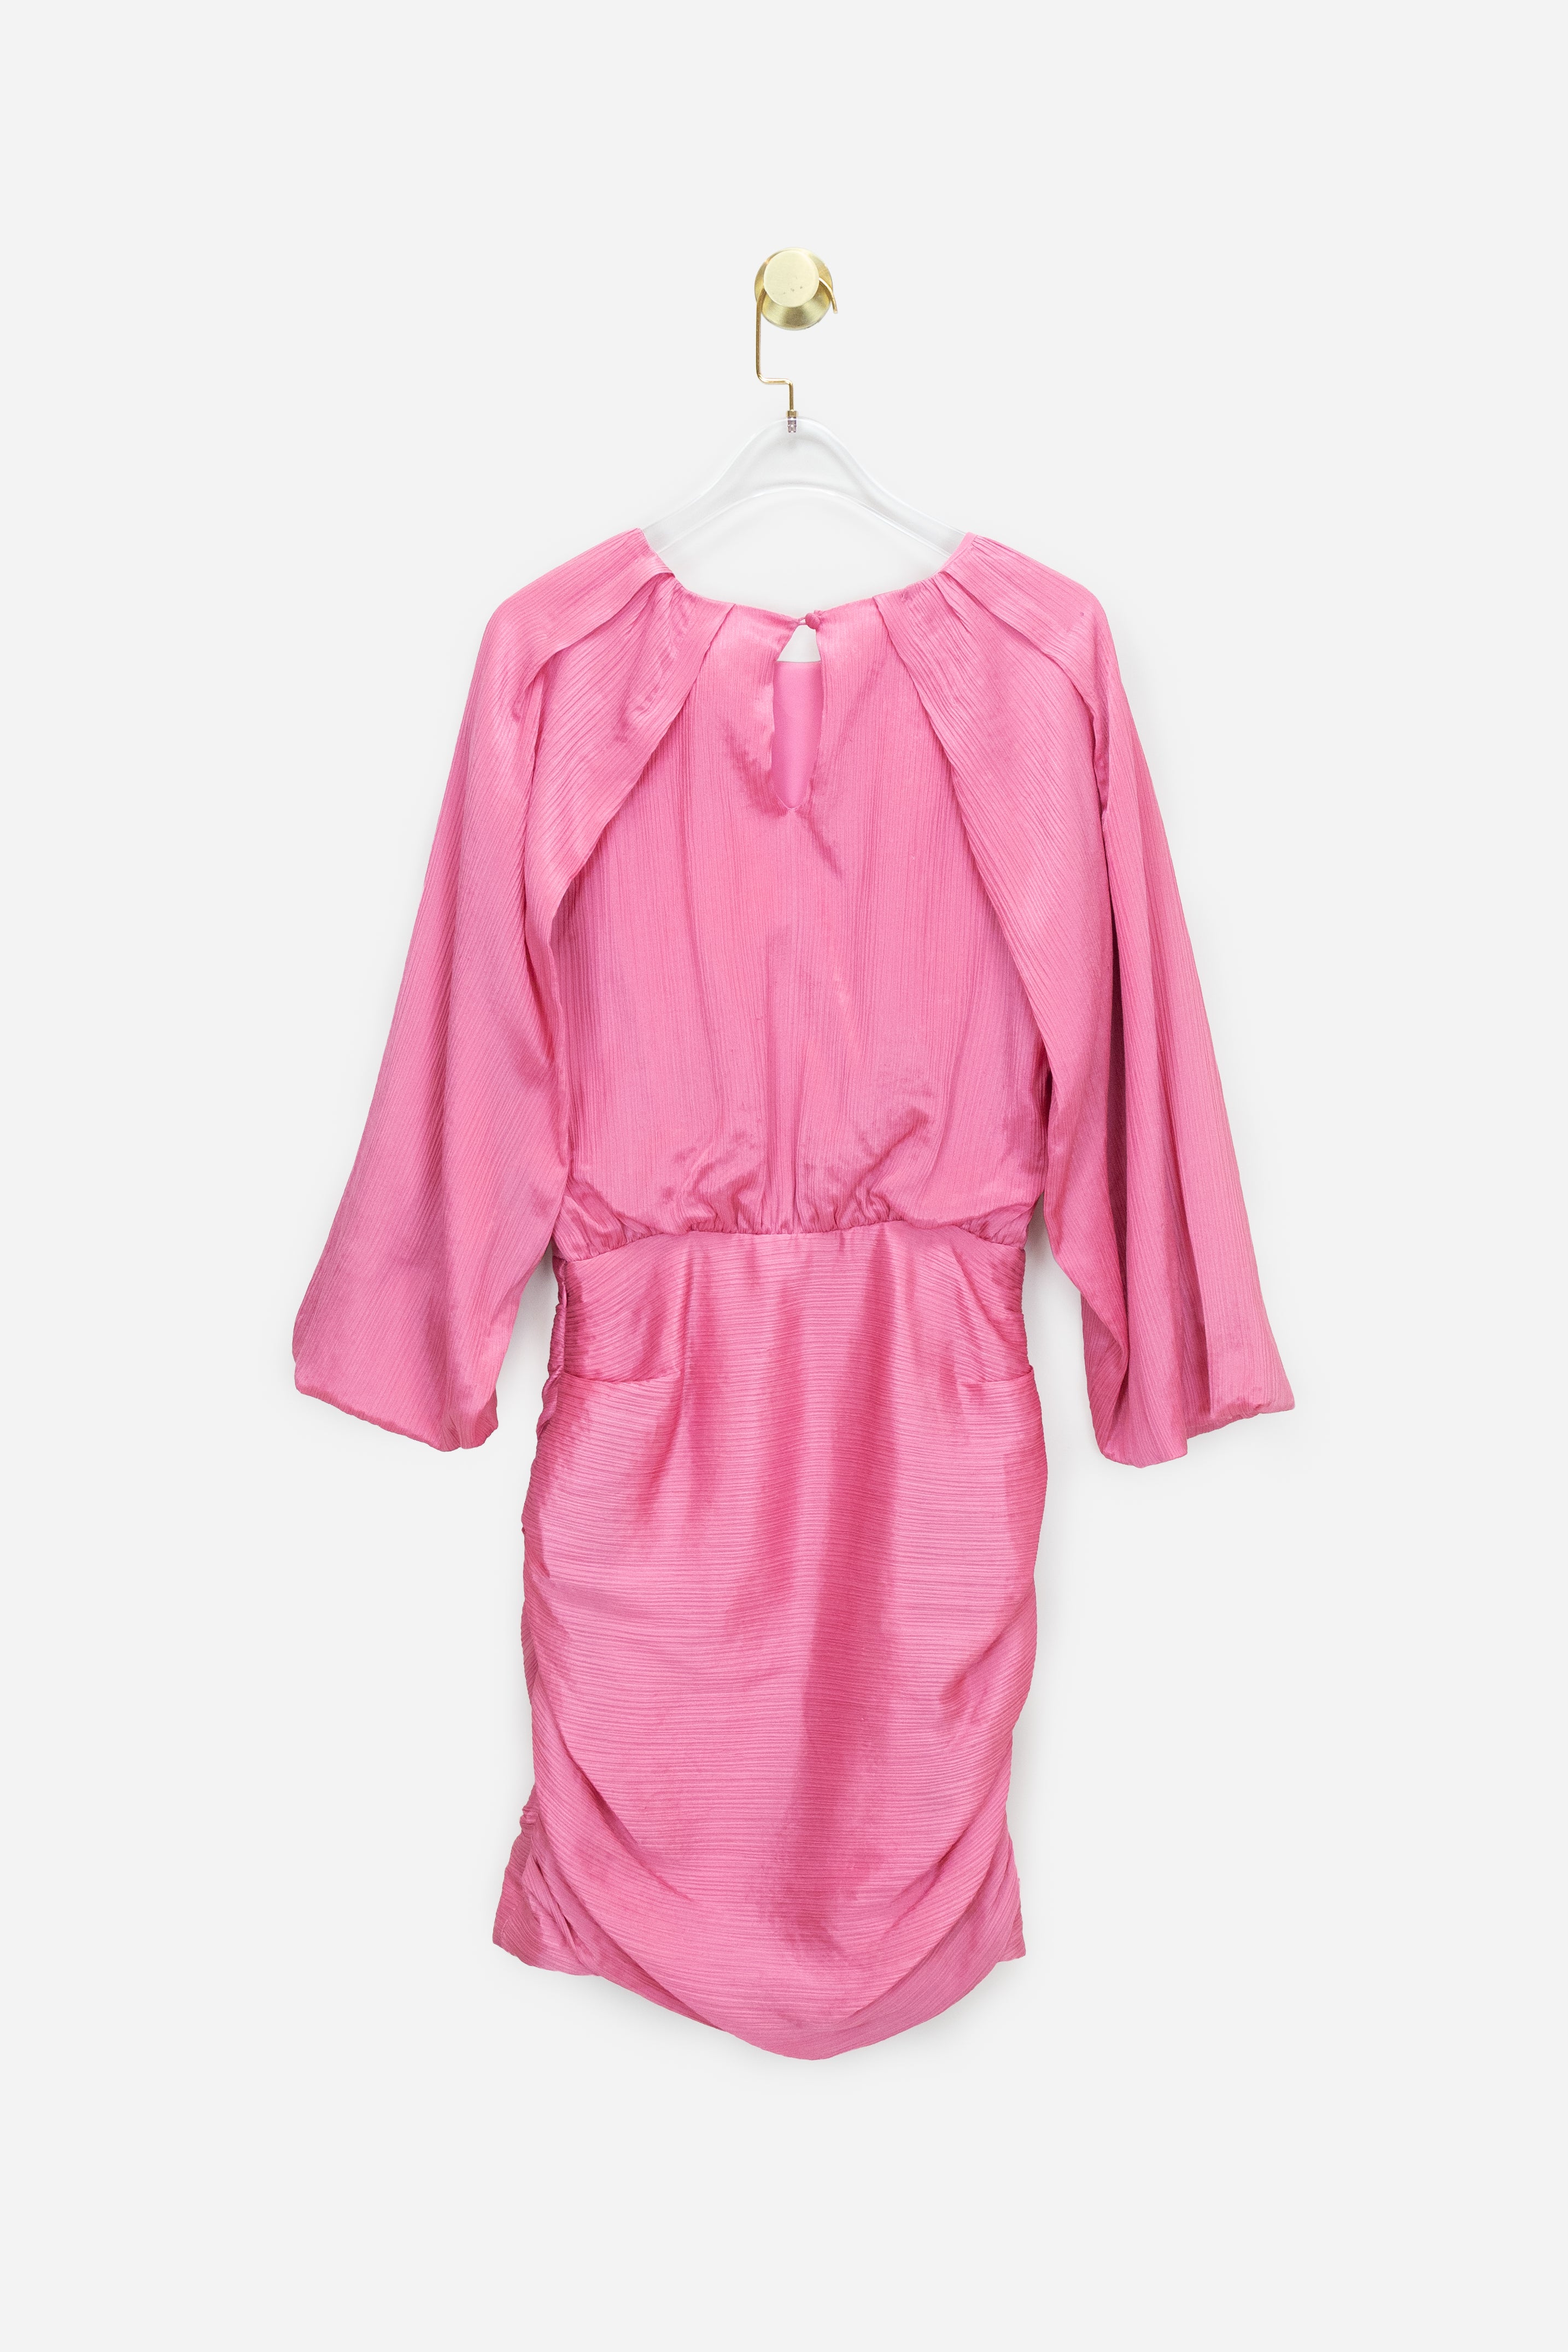 Gracelynn Sherbert Dress - So Over It Luxury Consignment